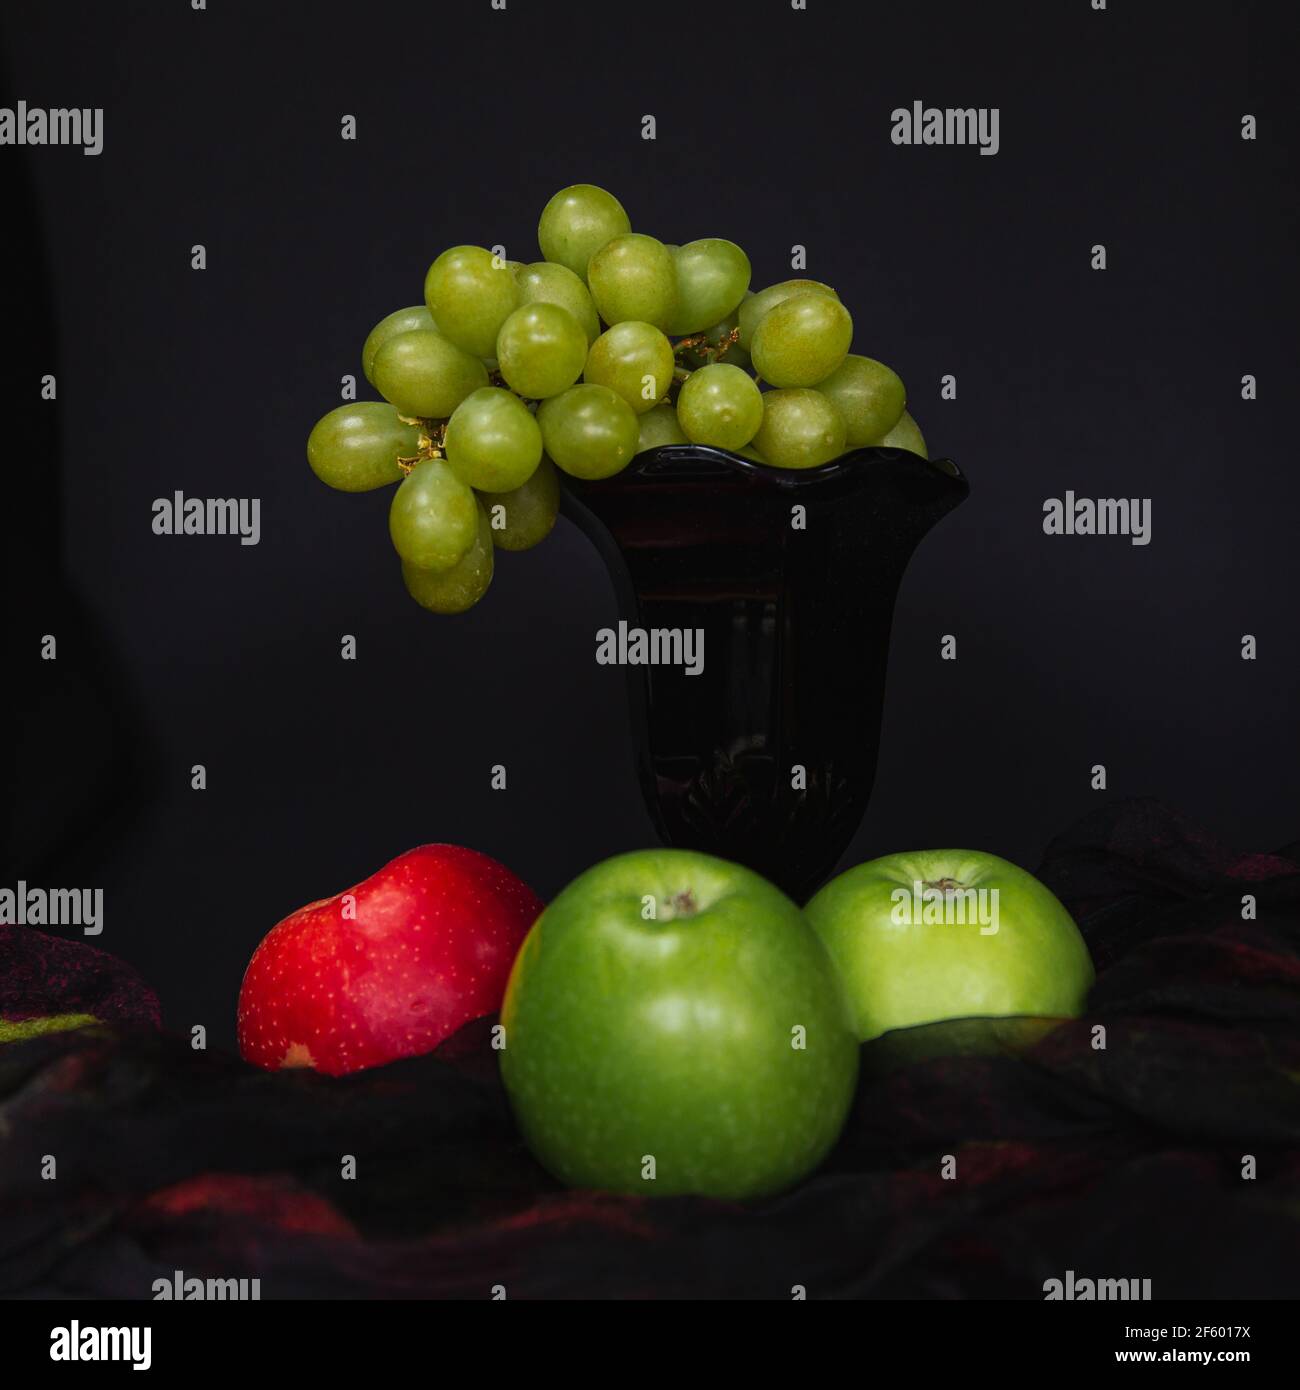 Apple,green and red apple, close up view, still life, detail shot, fruits still life, Art life, Nahaufnahme, Detailaufnahme, Stillleben, Arrangement Stock Photo